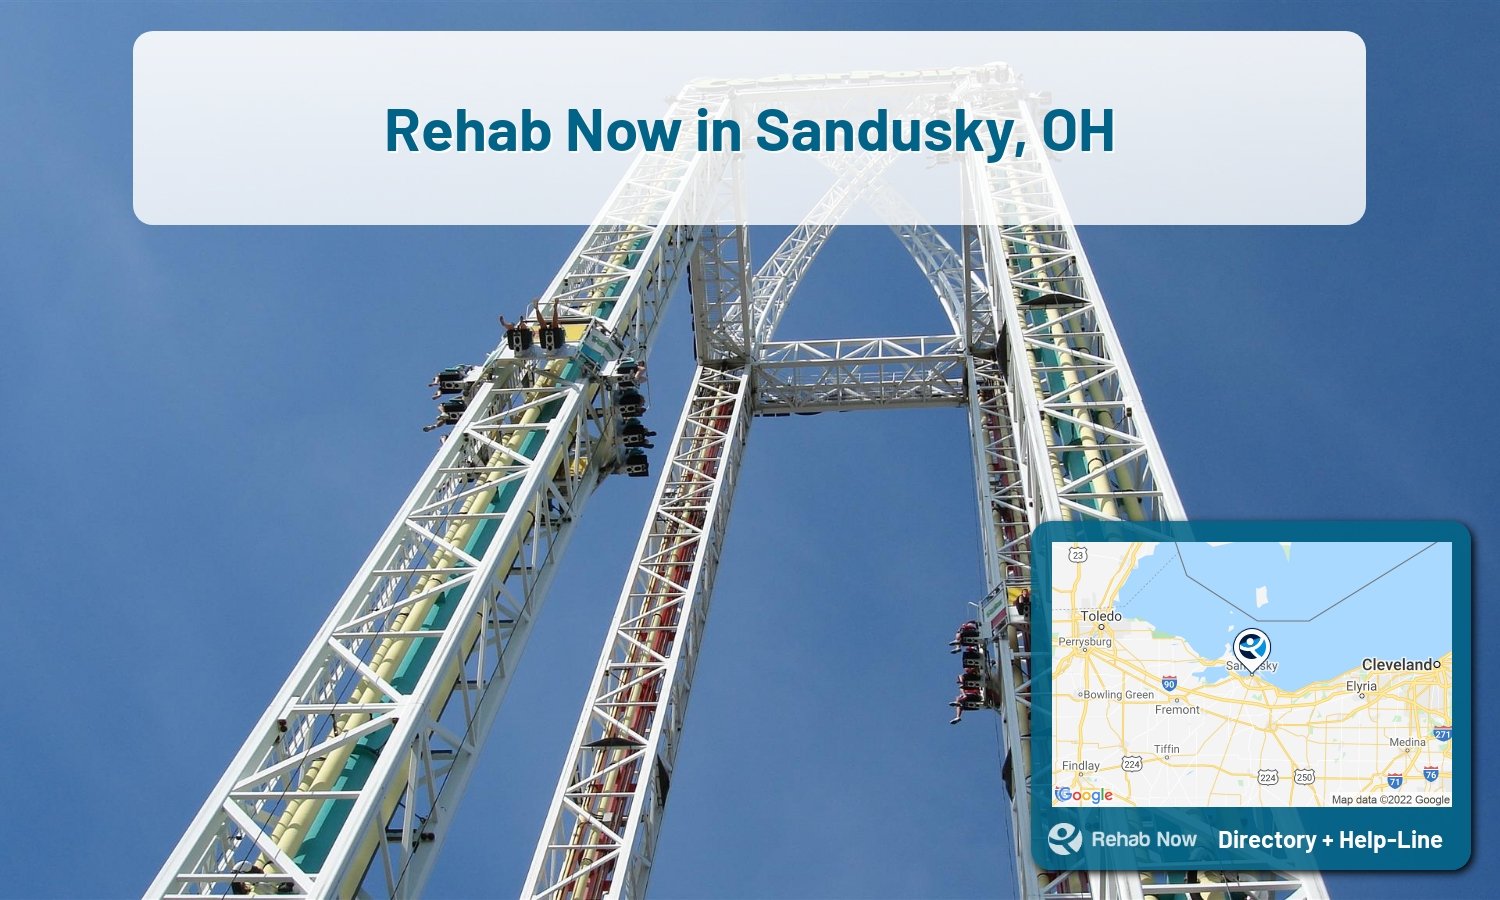 Sandusky, OH Treatment Centers. Find drug rehab in Sandusky, Ohio, or detox and treatment programs. Get the right help now!